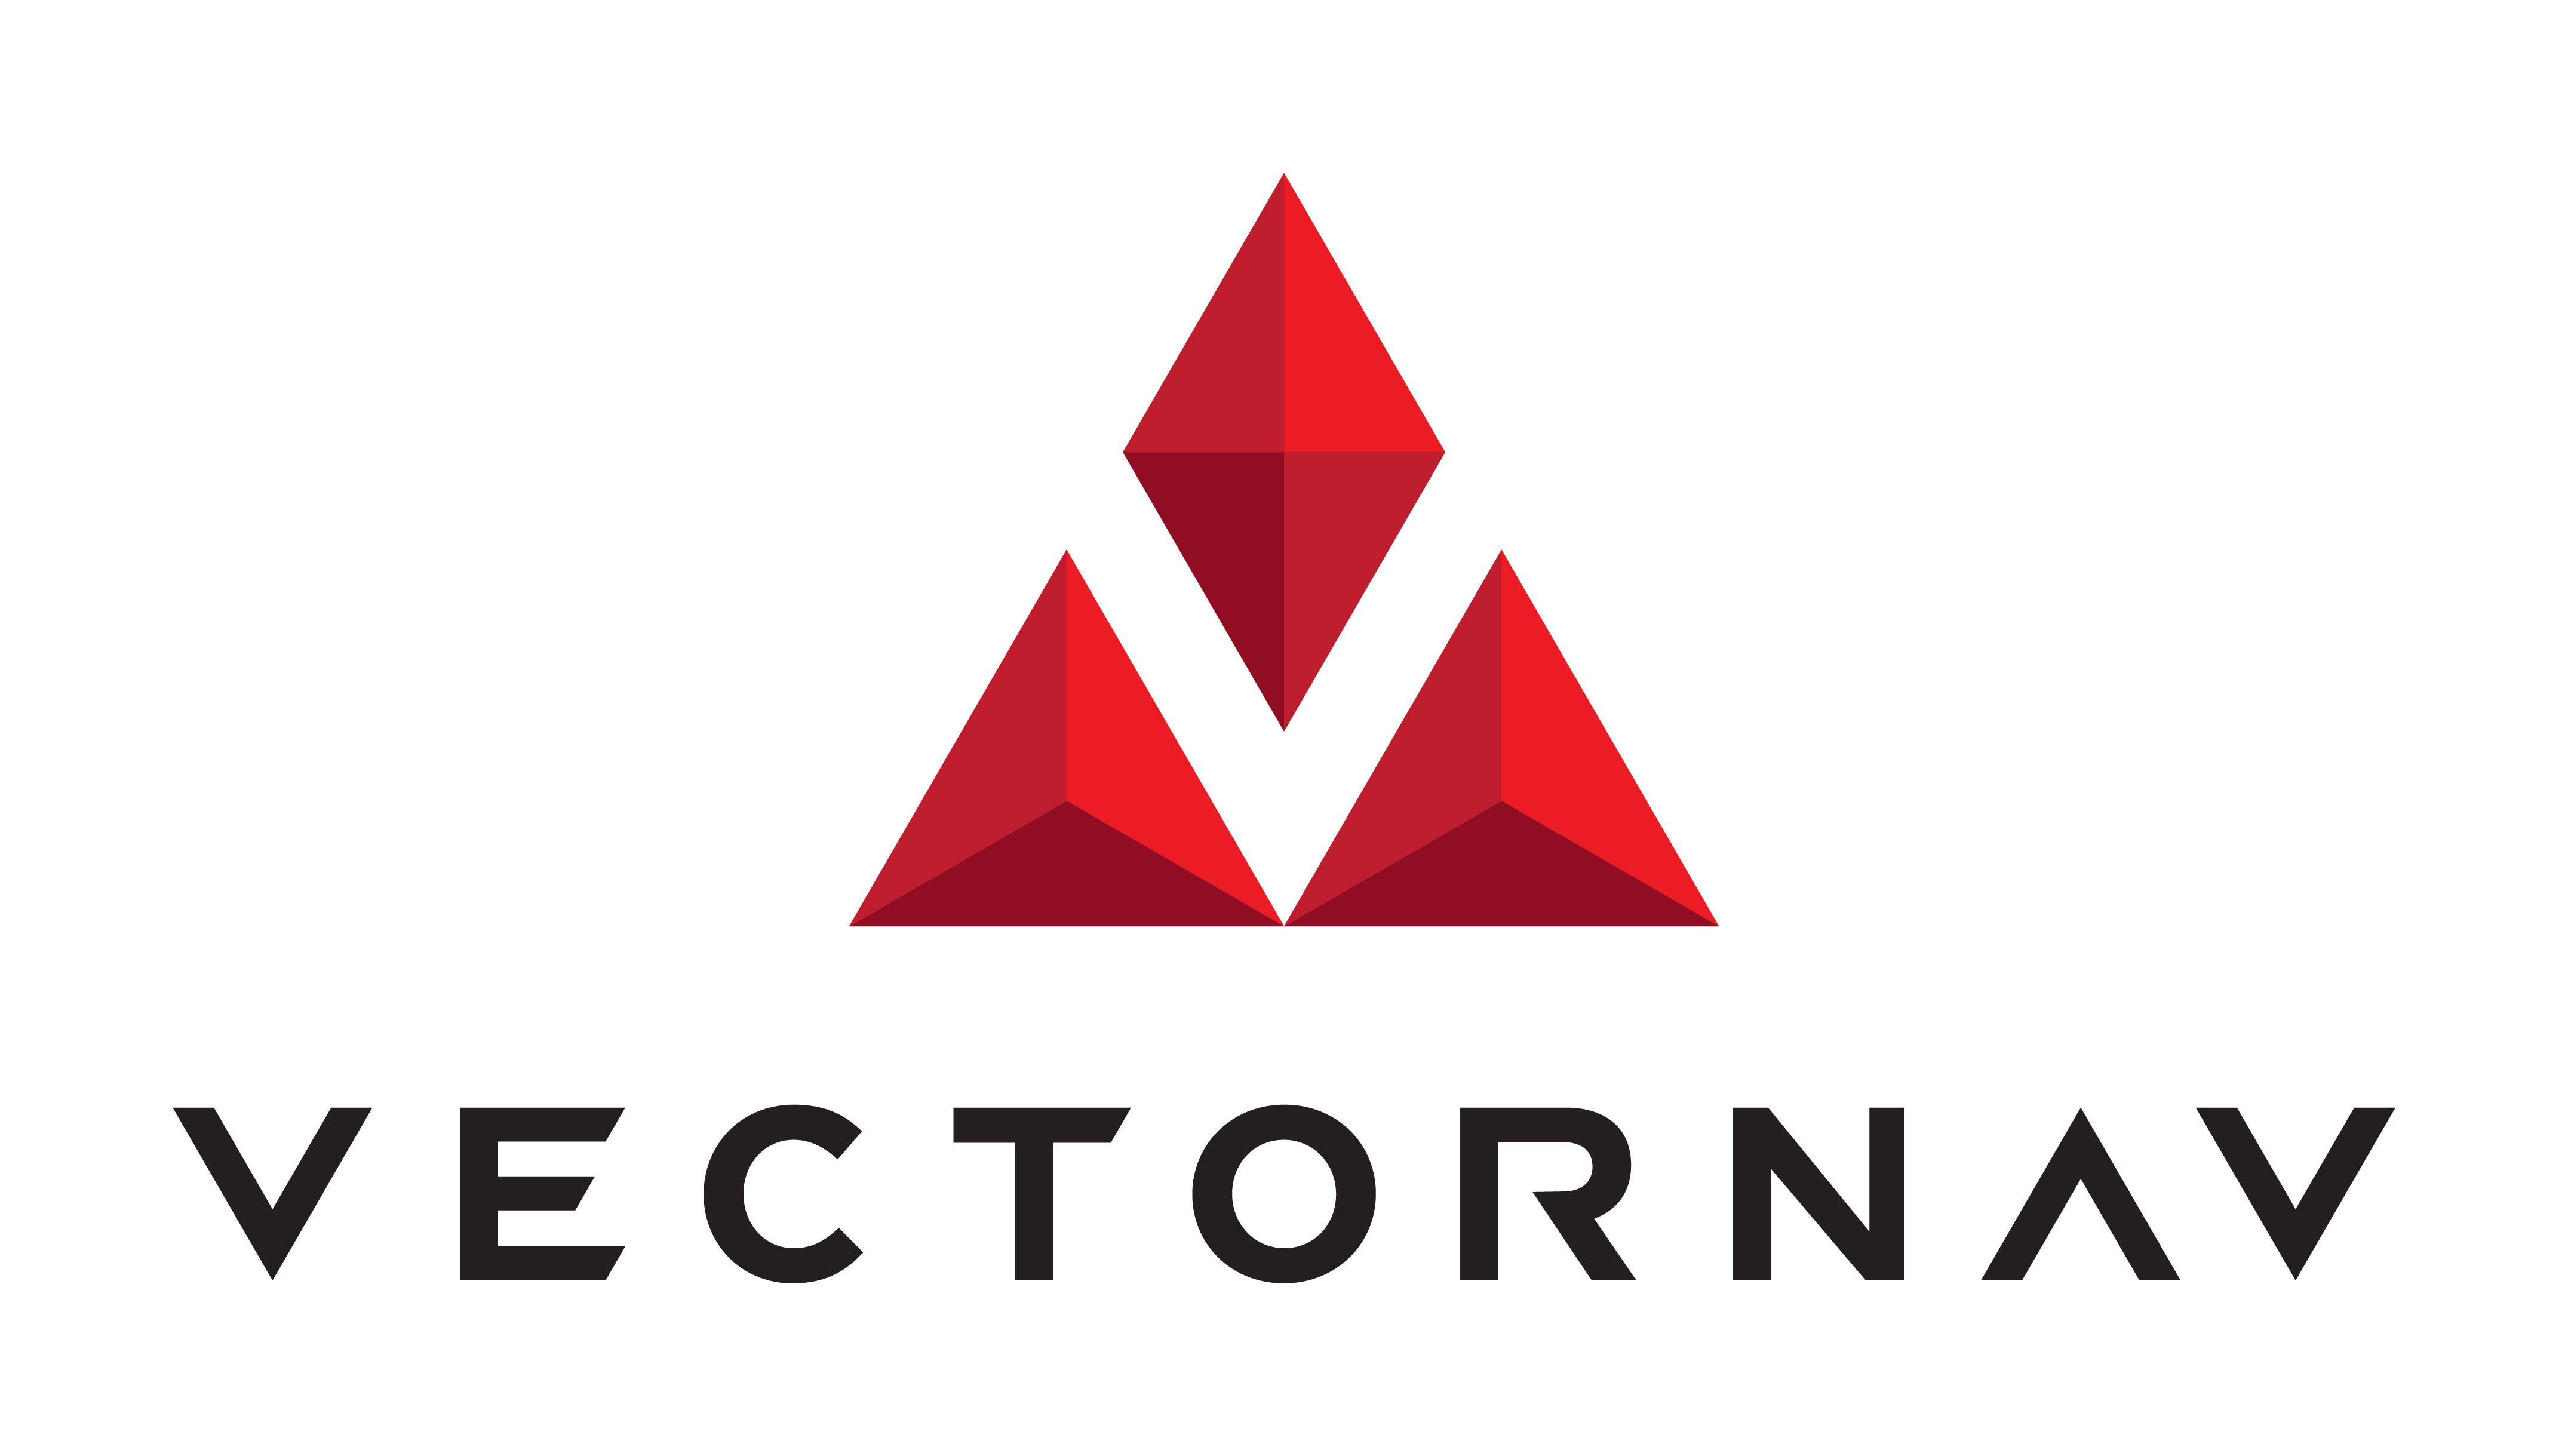 VectorNav Technologies